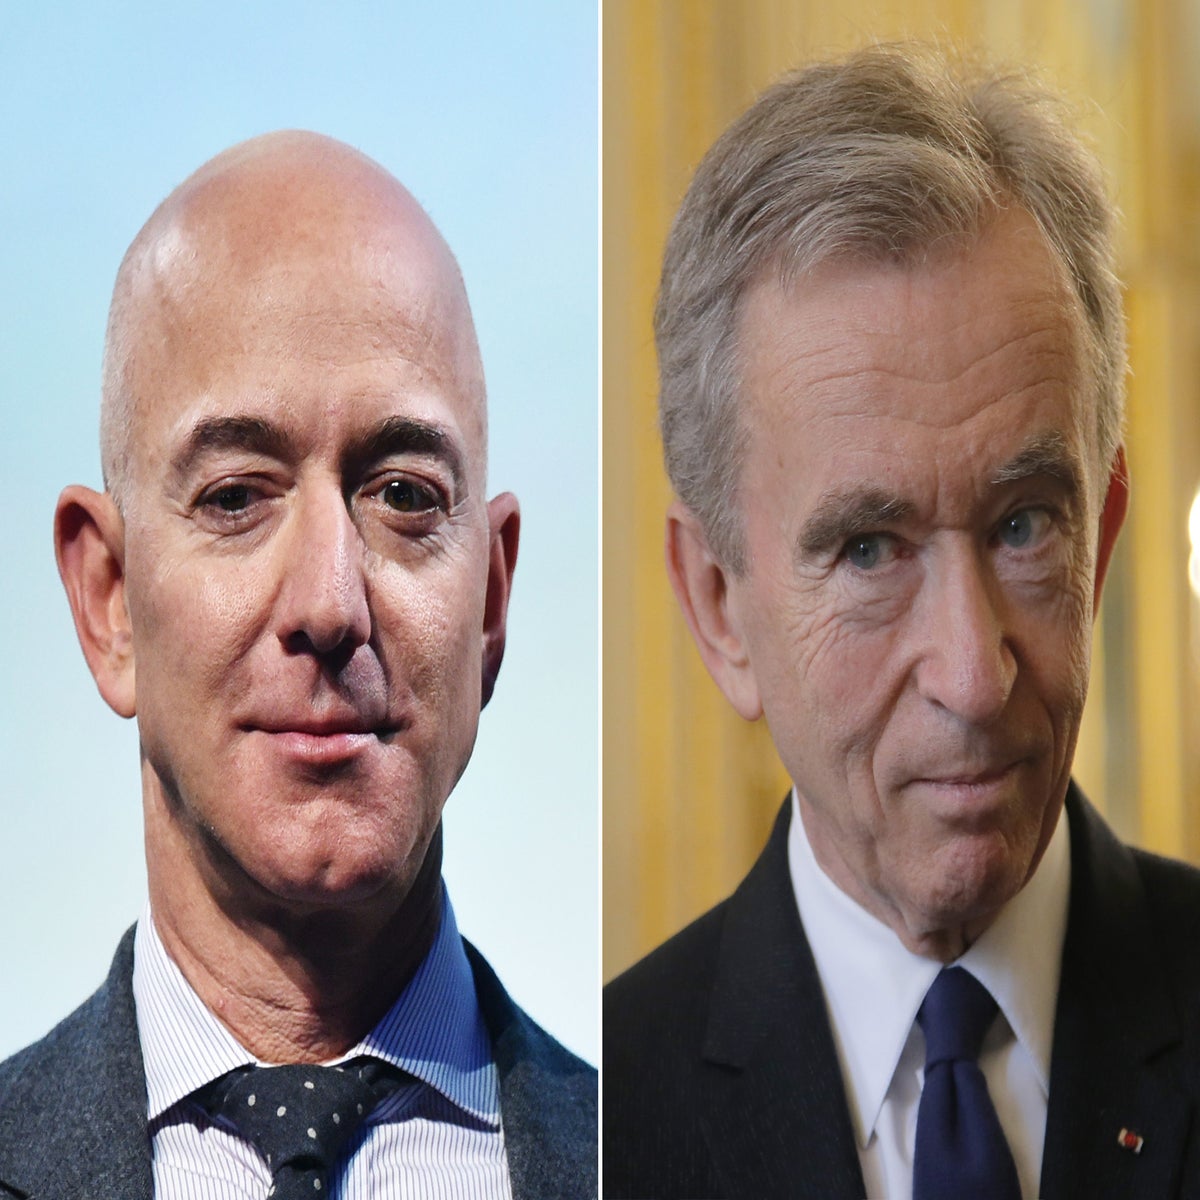 Louis Vuitton chairman Bernard Arnault pips Jeff Bezos as the